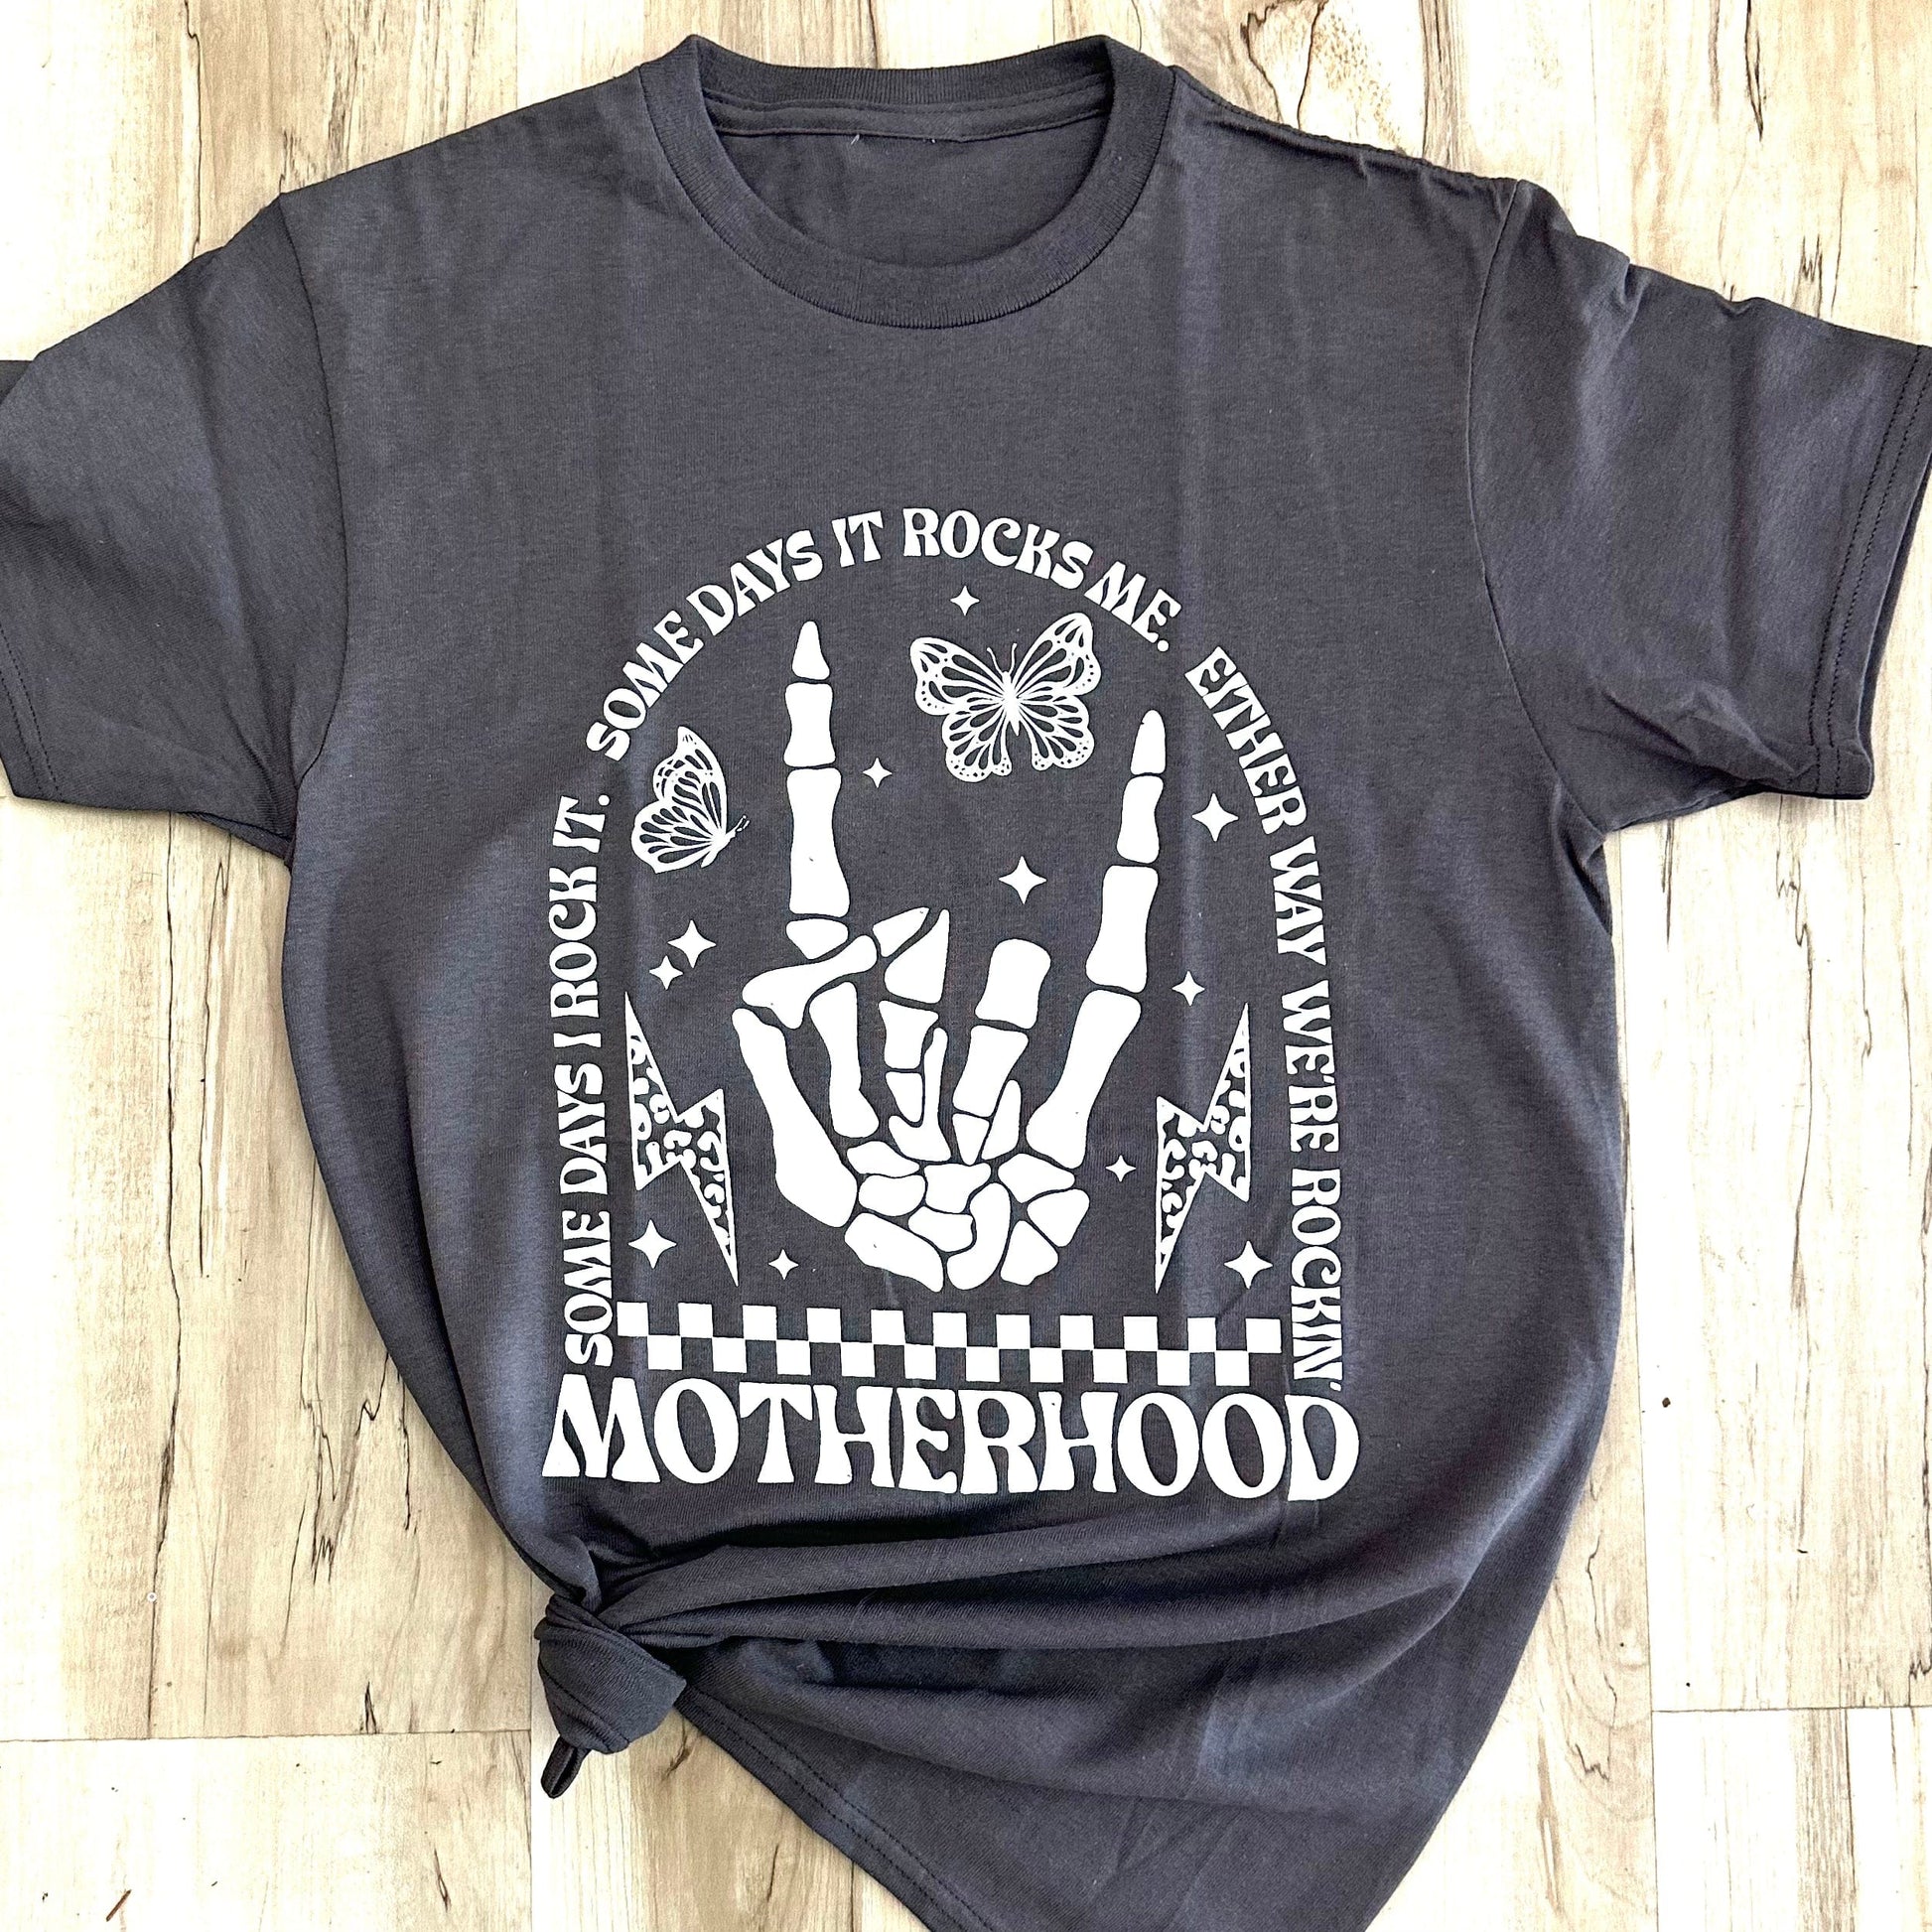 Envy Stylz Boutique Women - Apparel - Shirts - T-Shirts Motherhood Rocks Graphic Tee